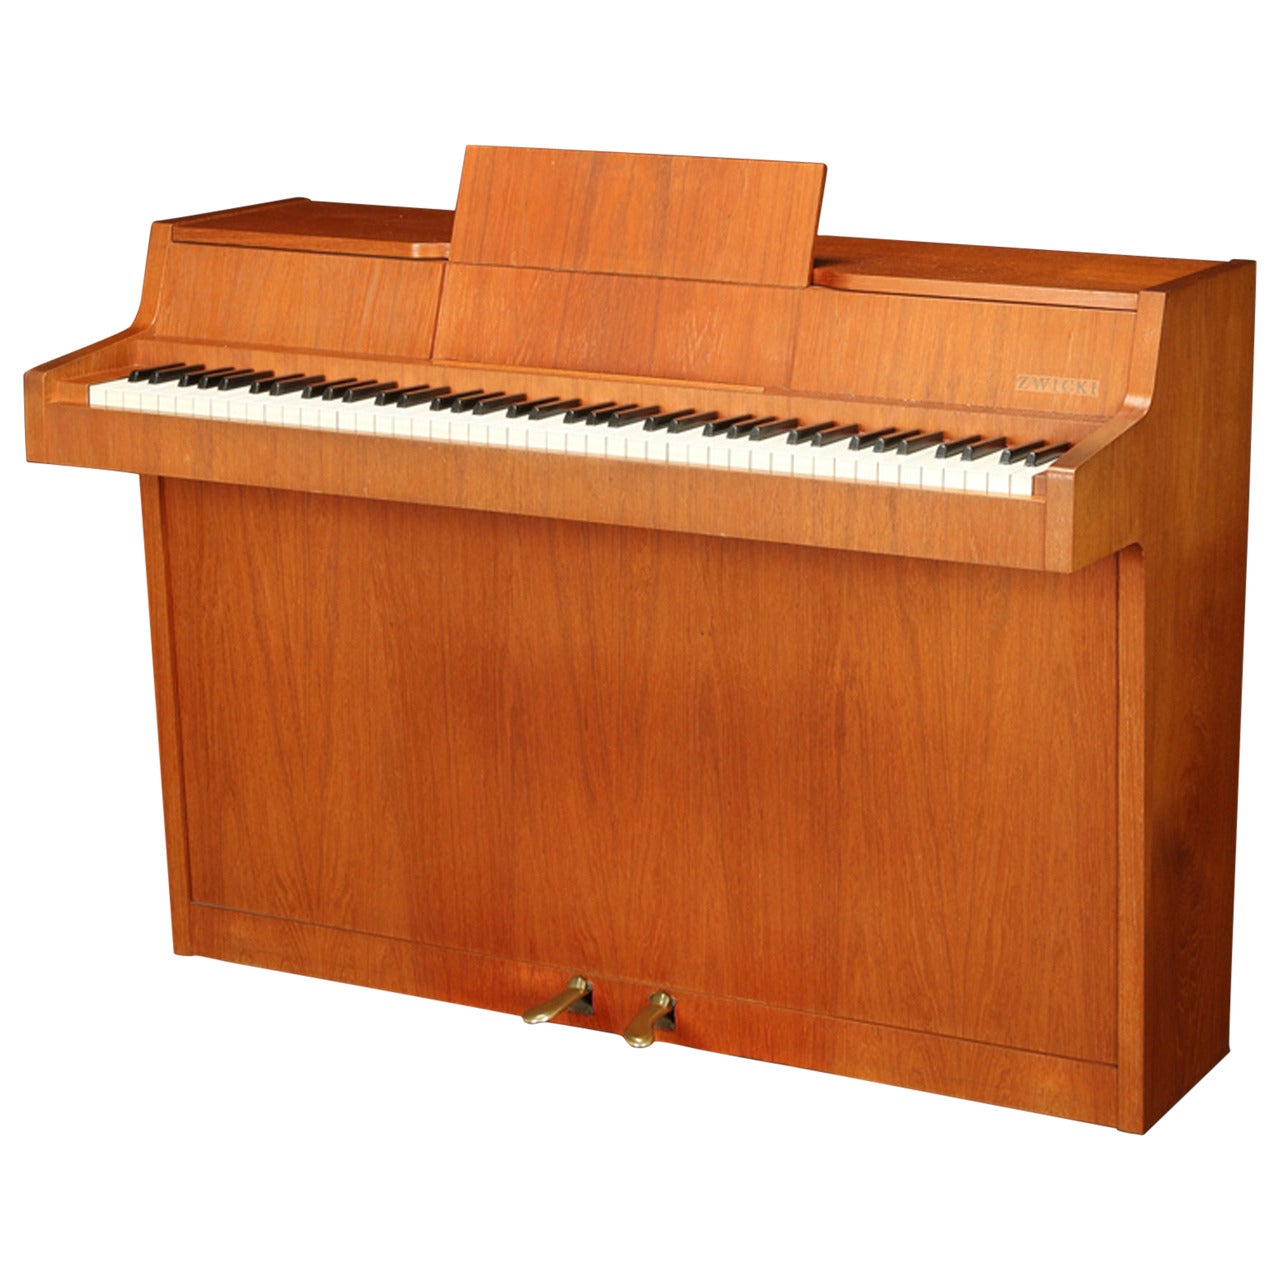 Danish Modernist Piano of Figured Teak, circa Early 1960s